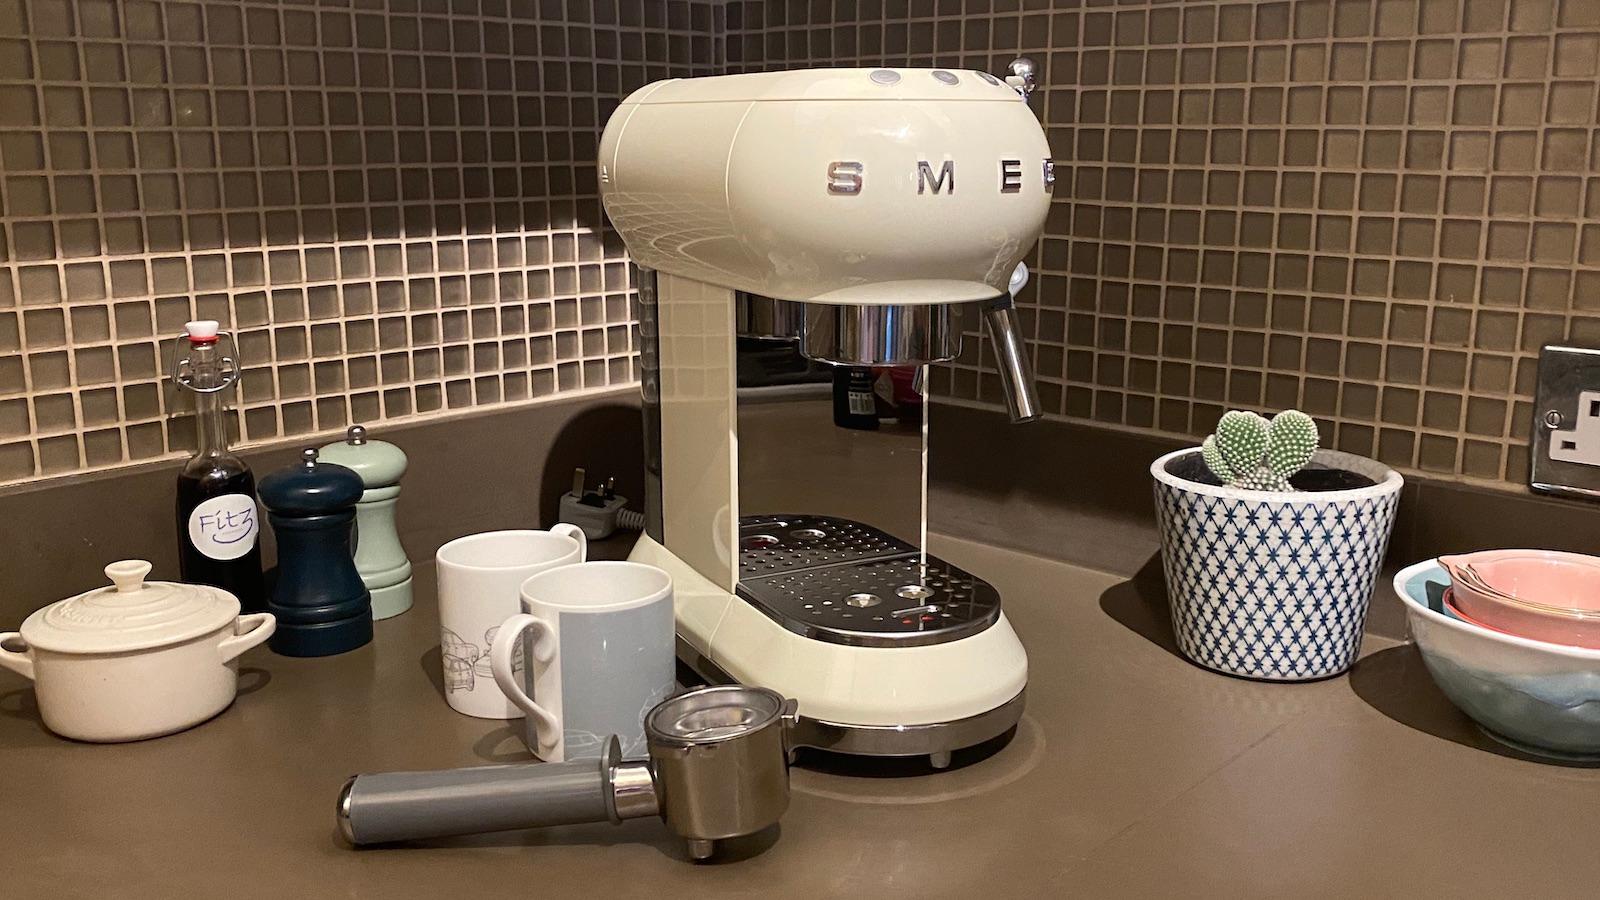   Smeg Espresso Koffiezetapparaat - Meest stijlvolle machine